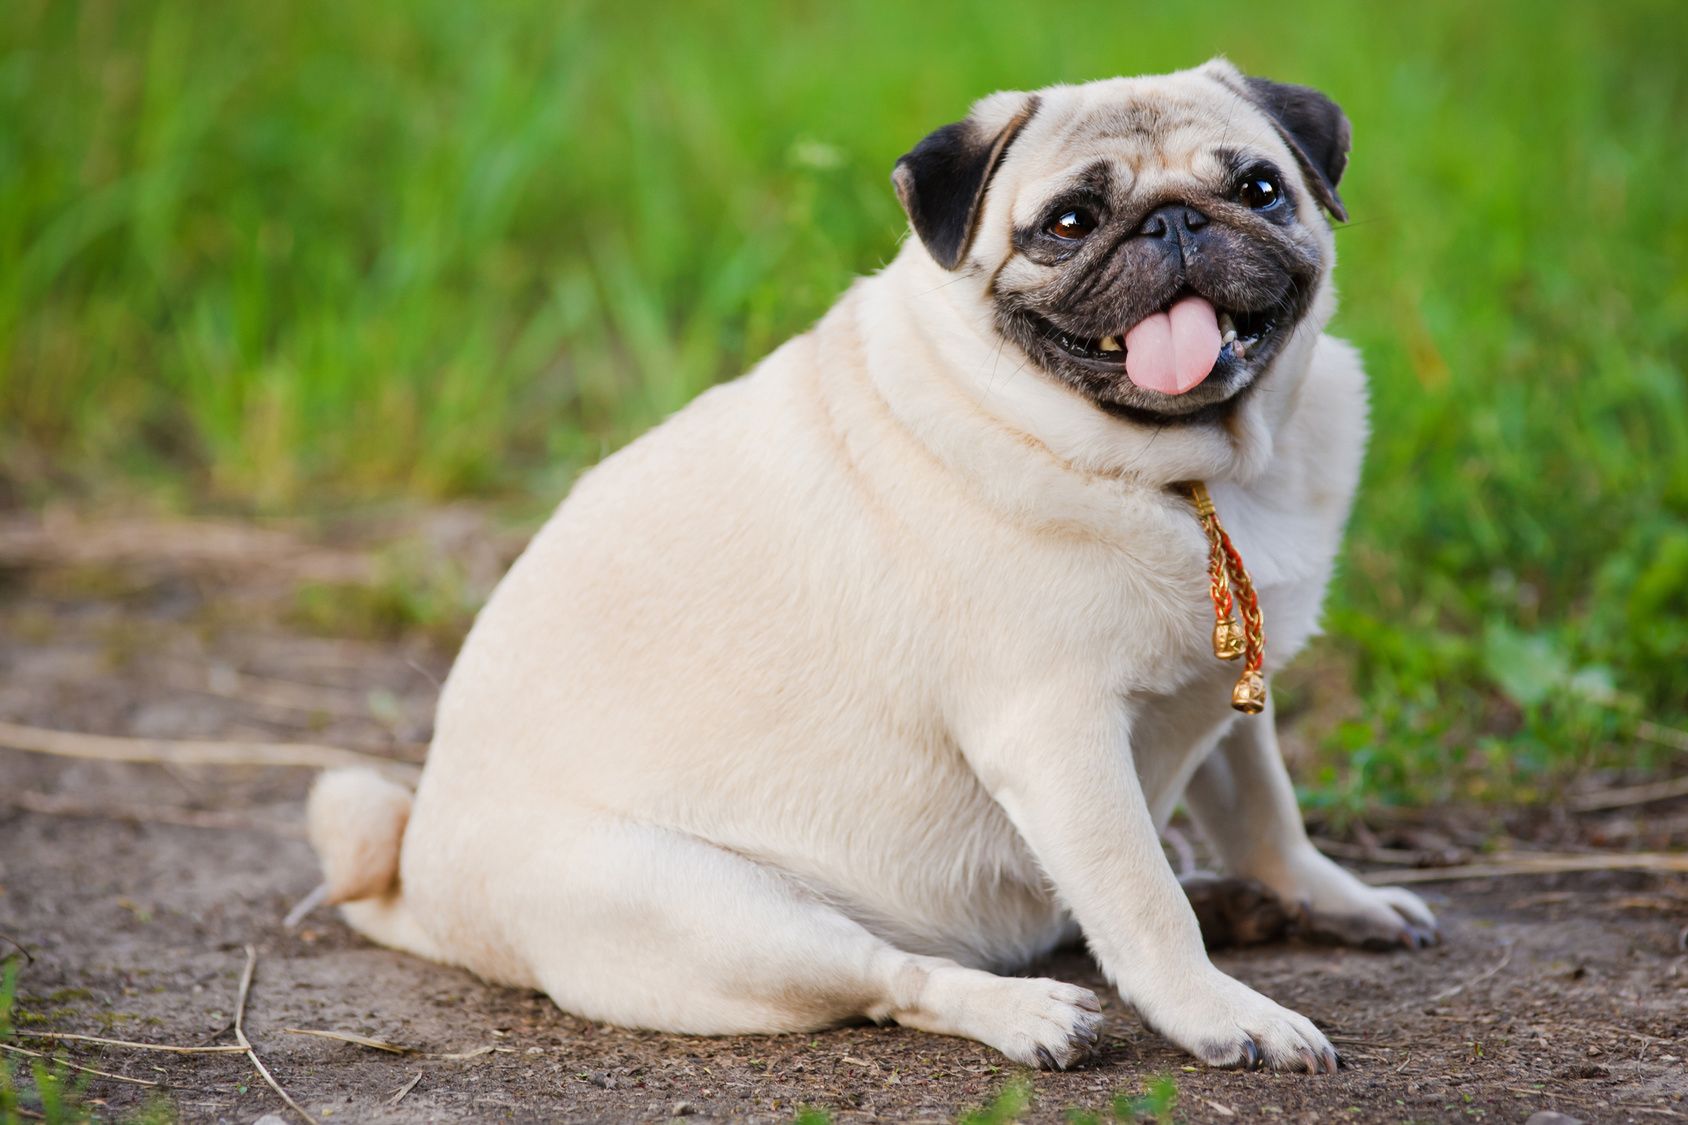 Little fat pug sitting on sidewalk in summer park.